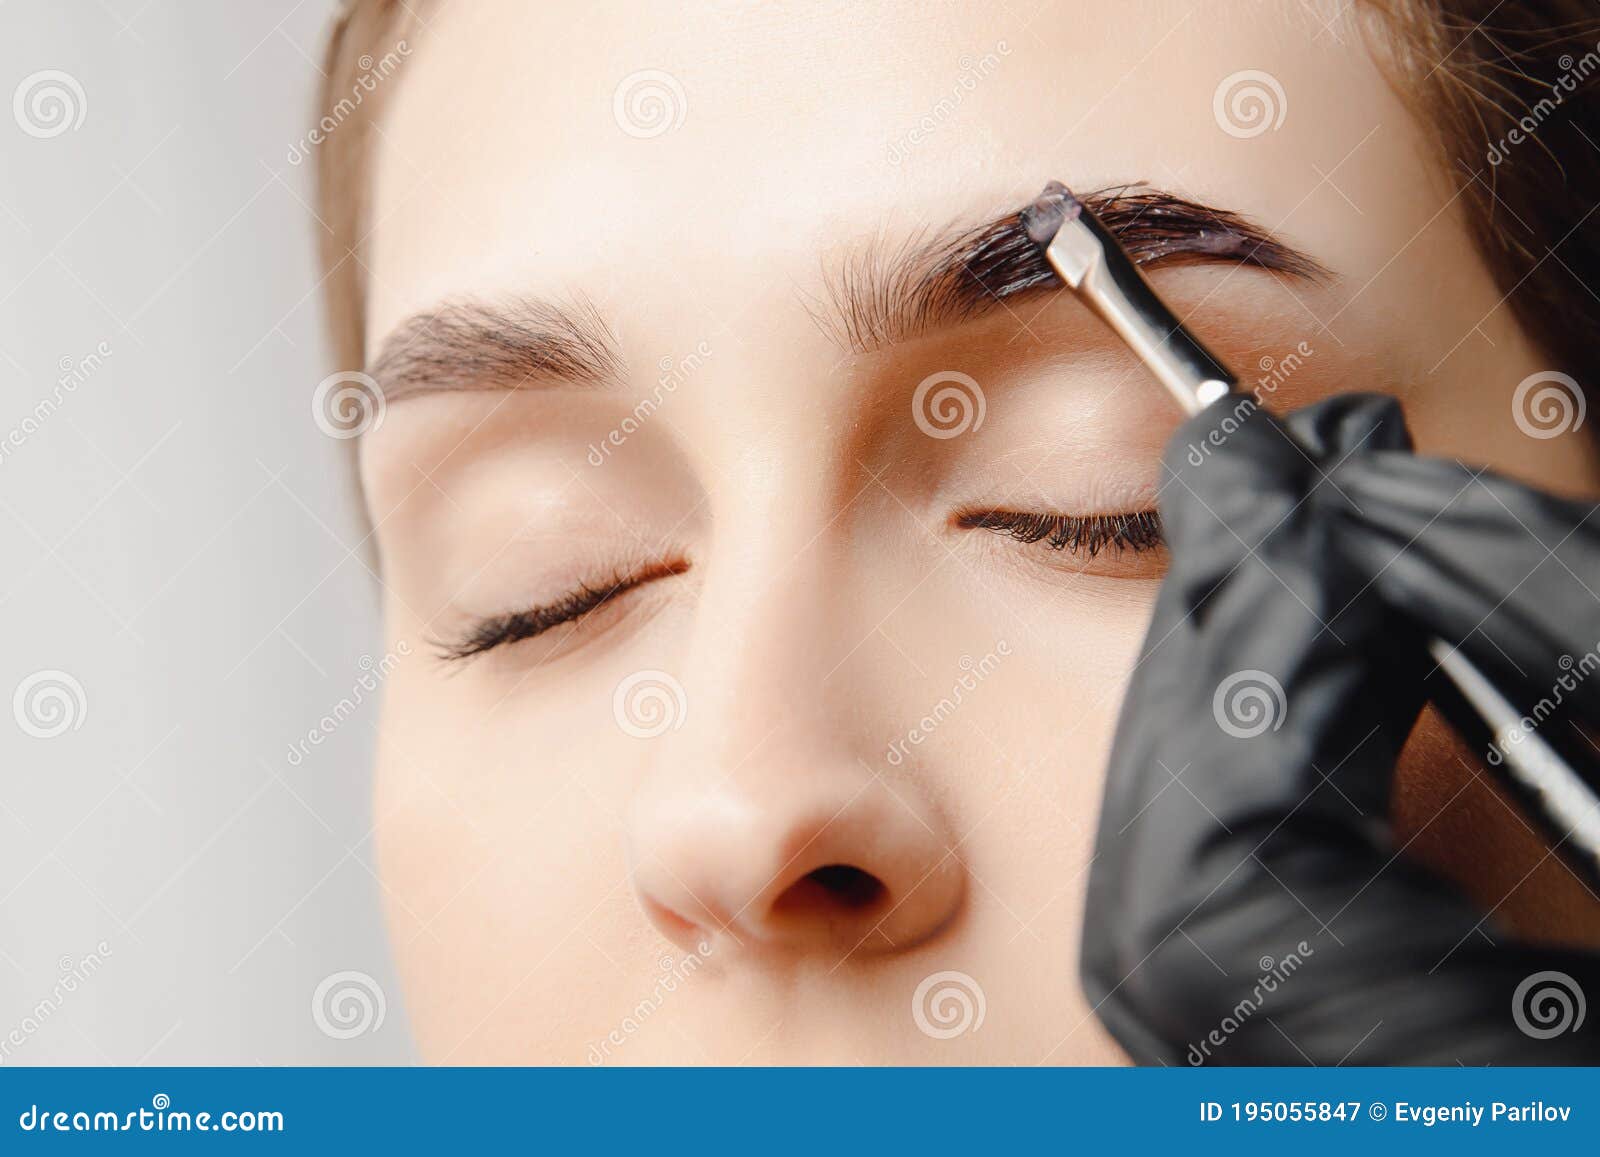 eyebrow tint, master correction of brow hair women